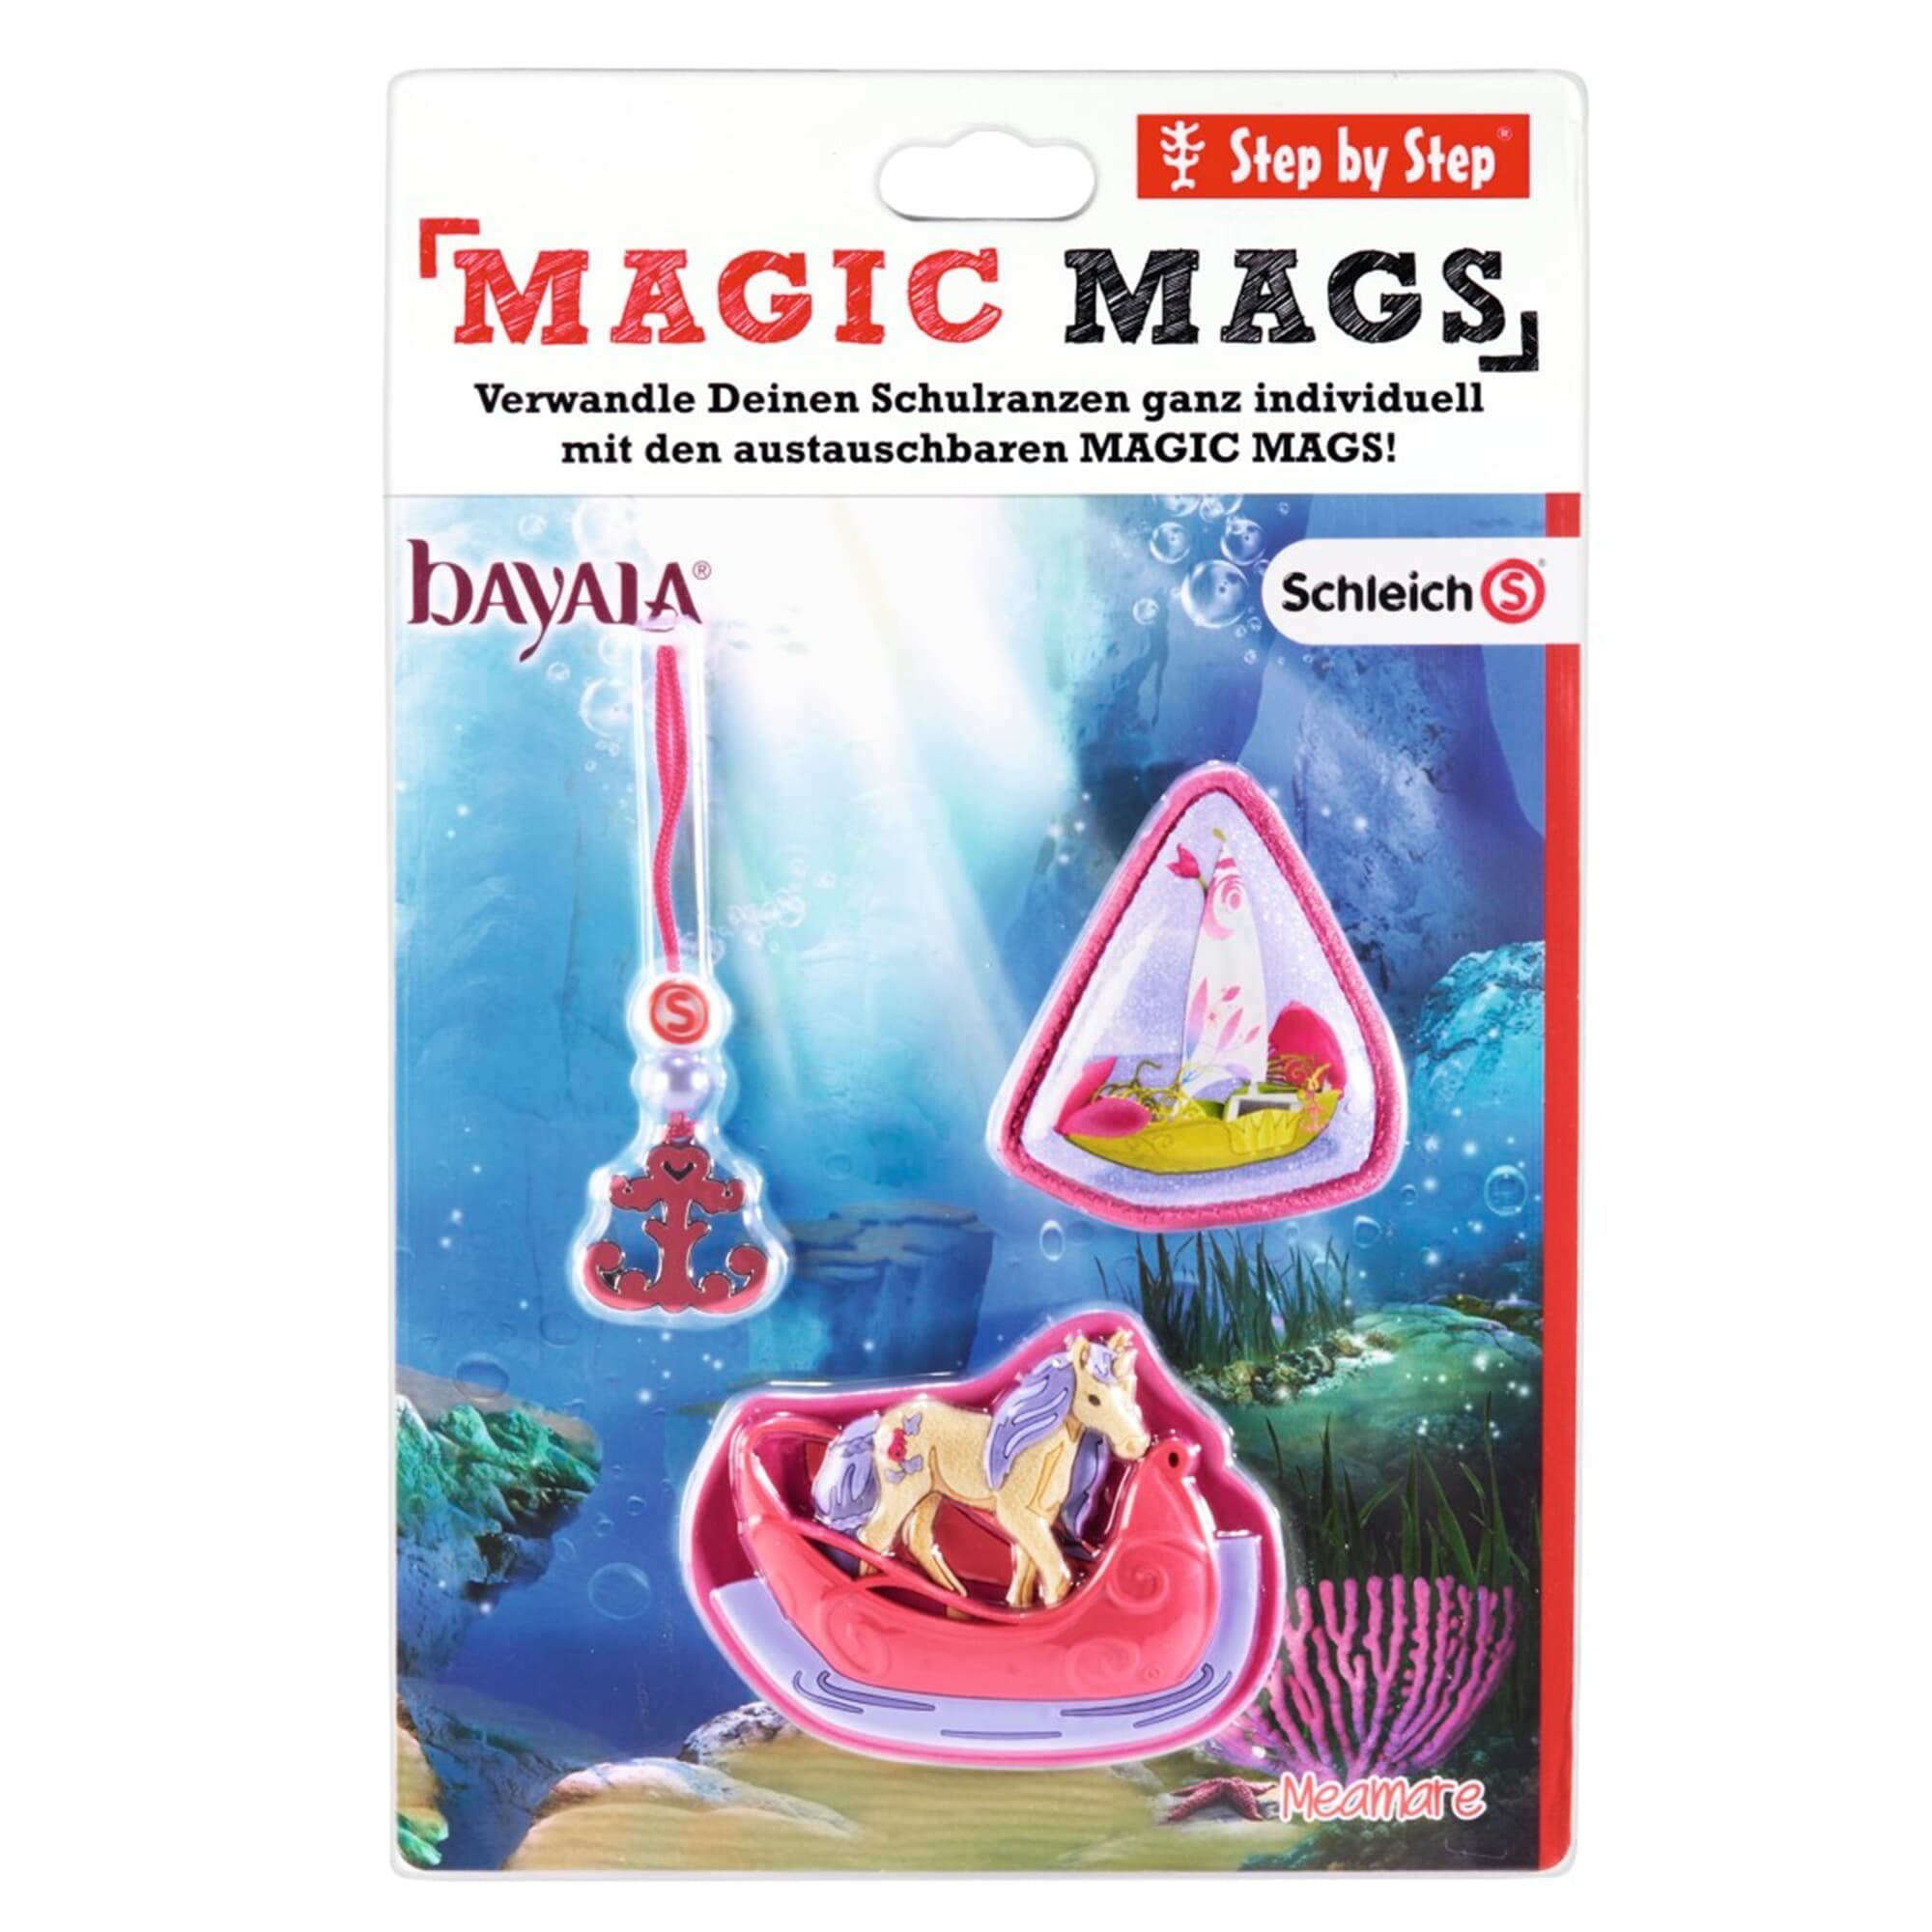 Schulranzen Meamare MAGS Step Step MAGIC bayala®, by